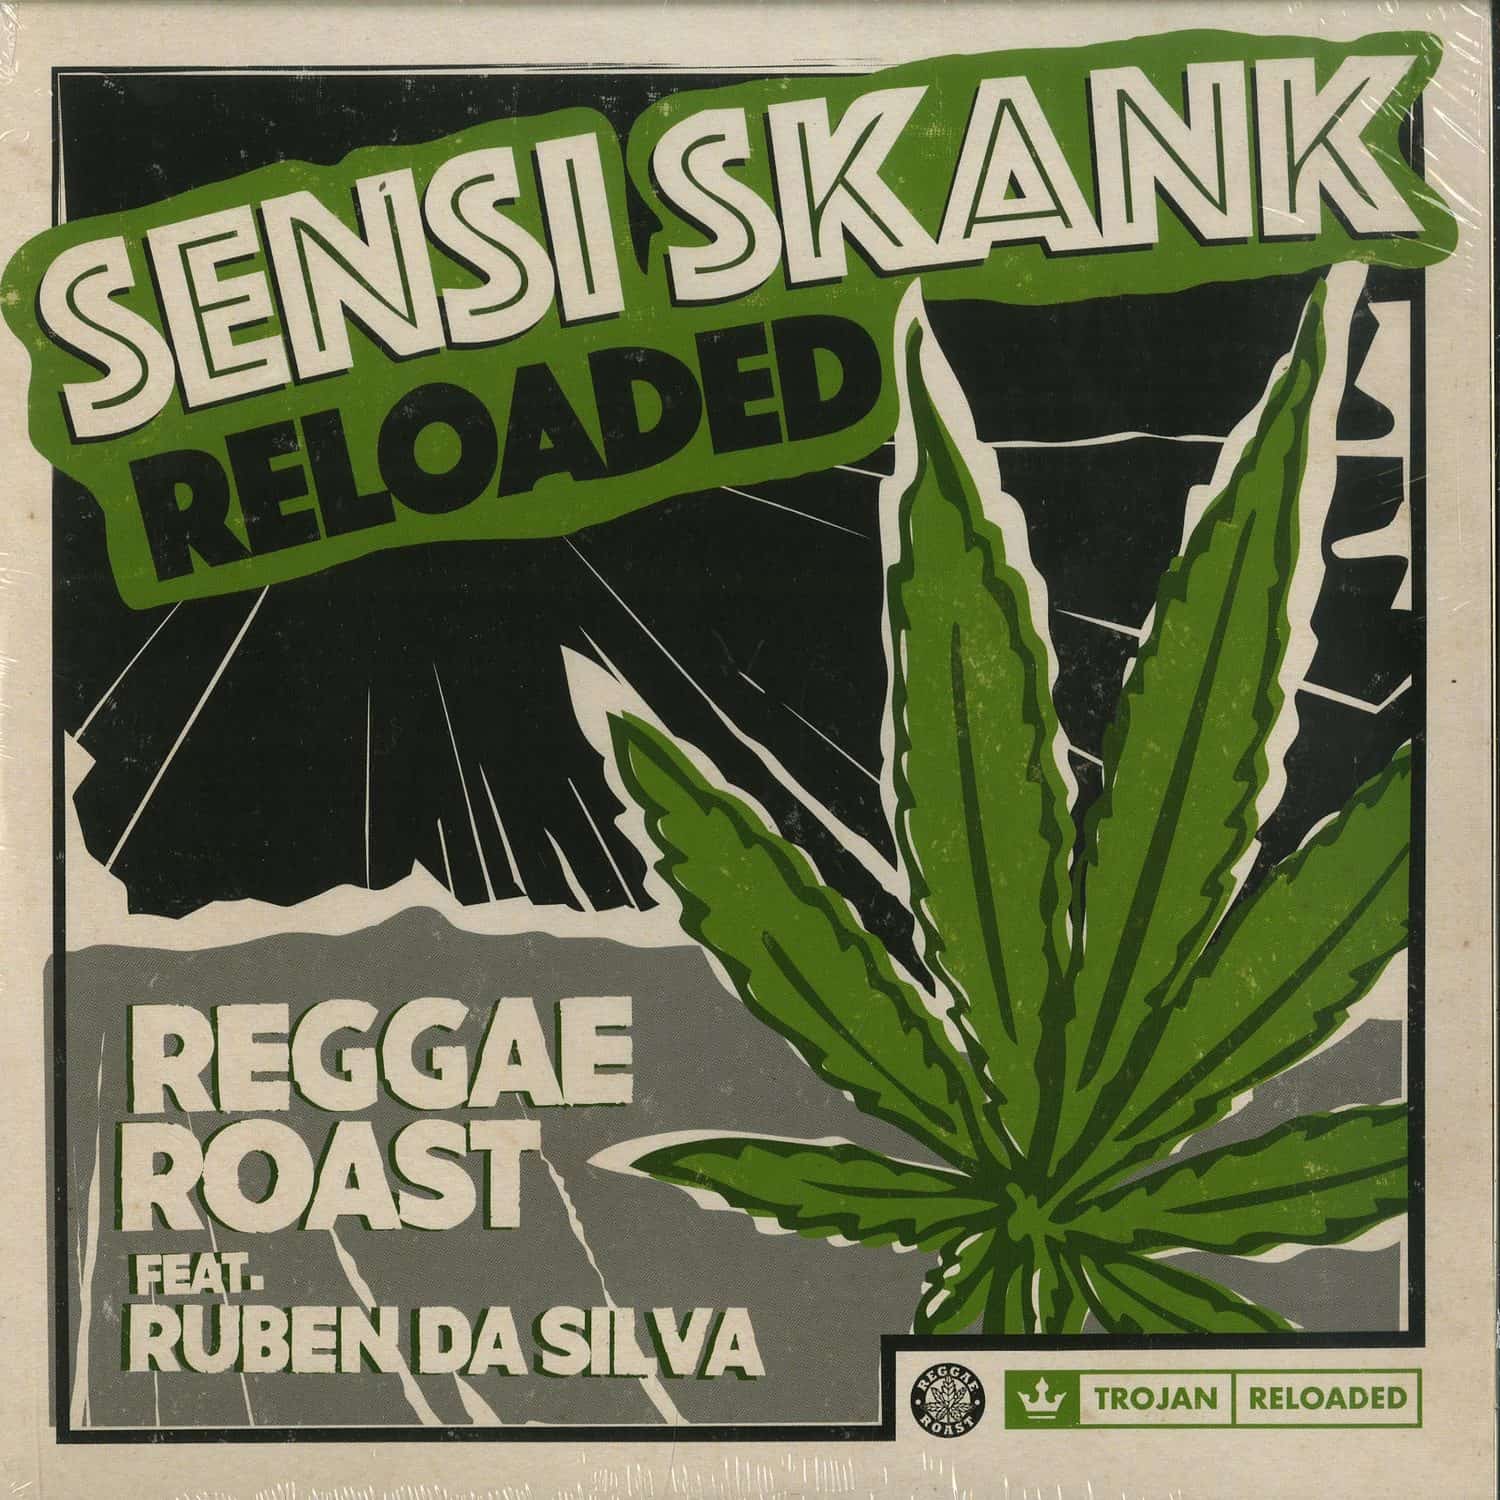 Reggae Roast - SENSI SKANK EP 